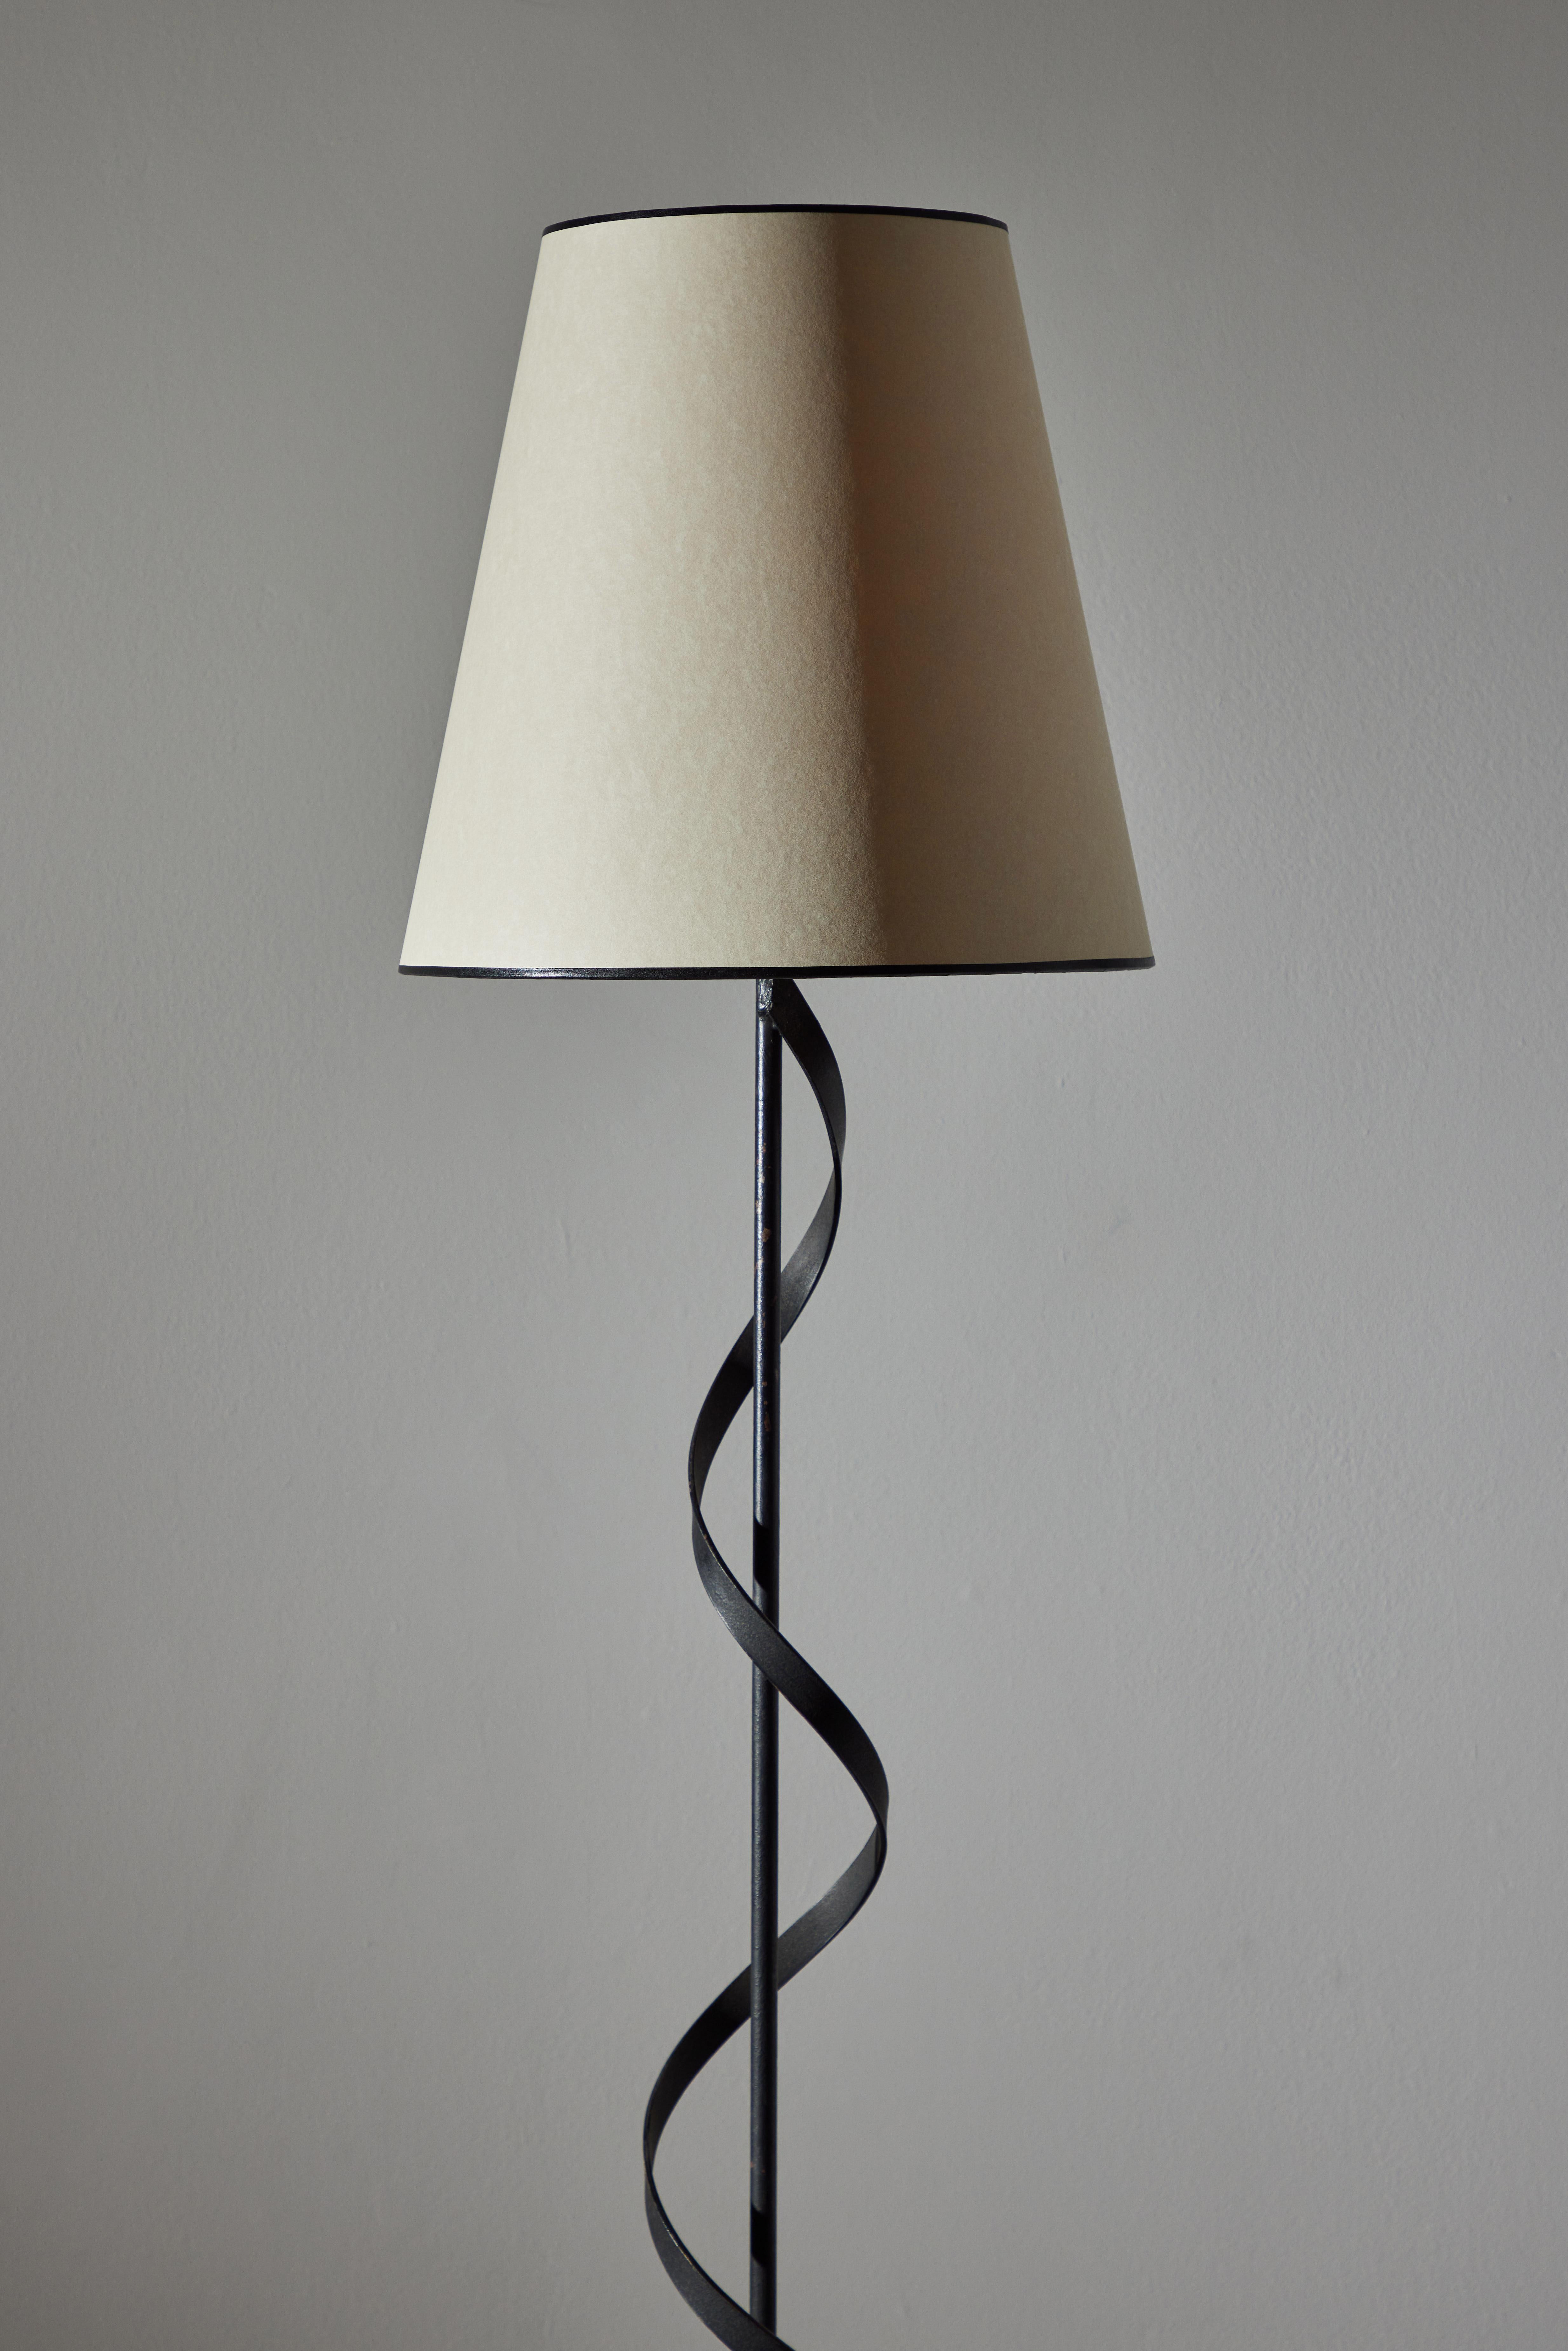 Mid-20th Century American Floor Lamp